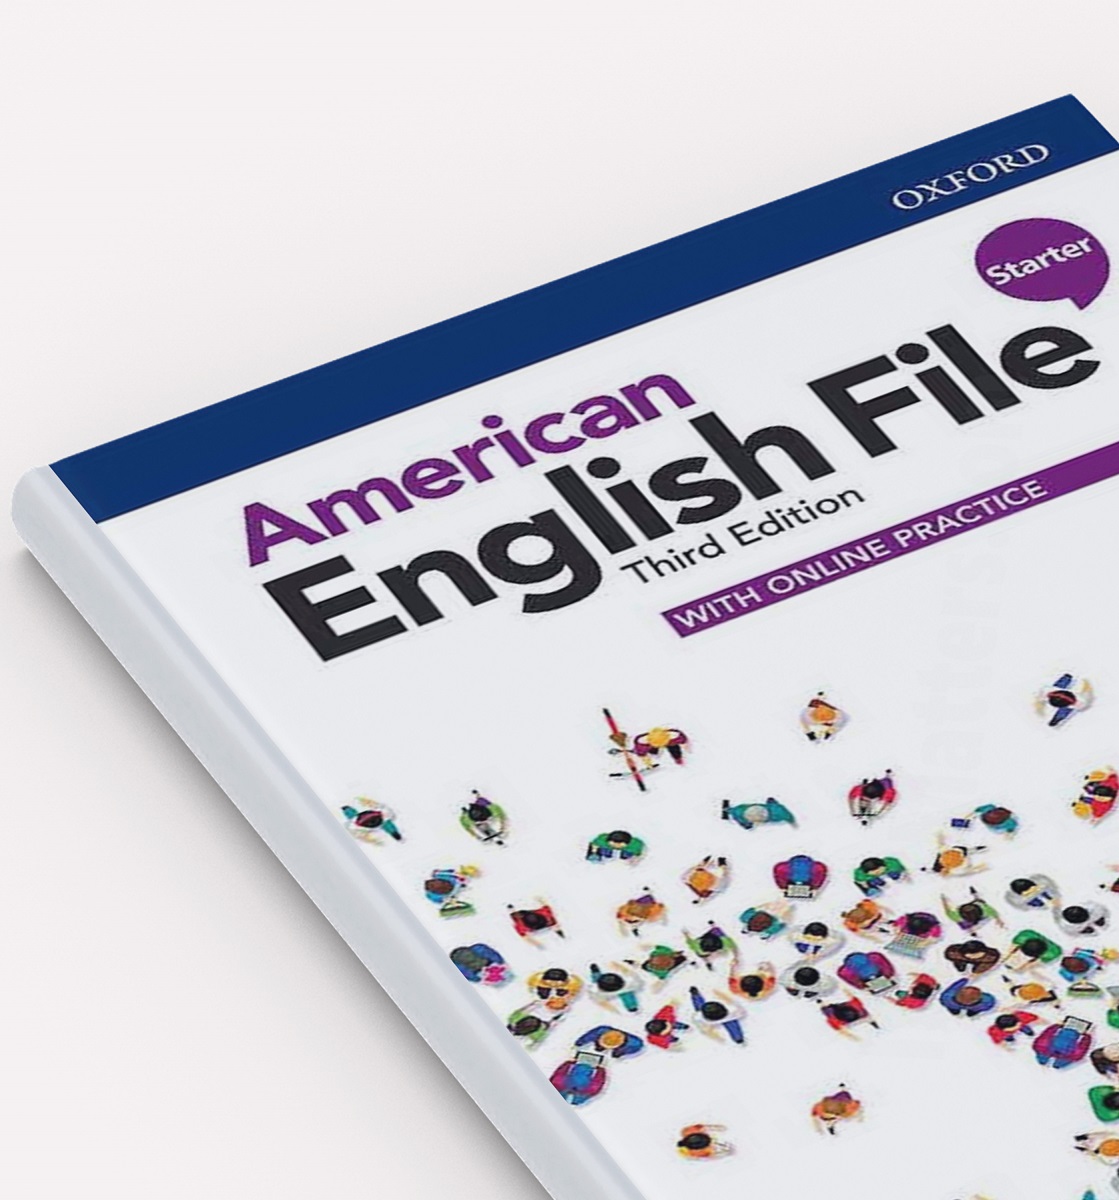 کتاب American English File Starter